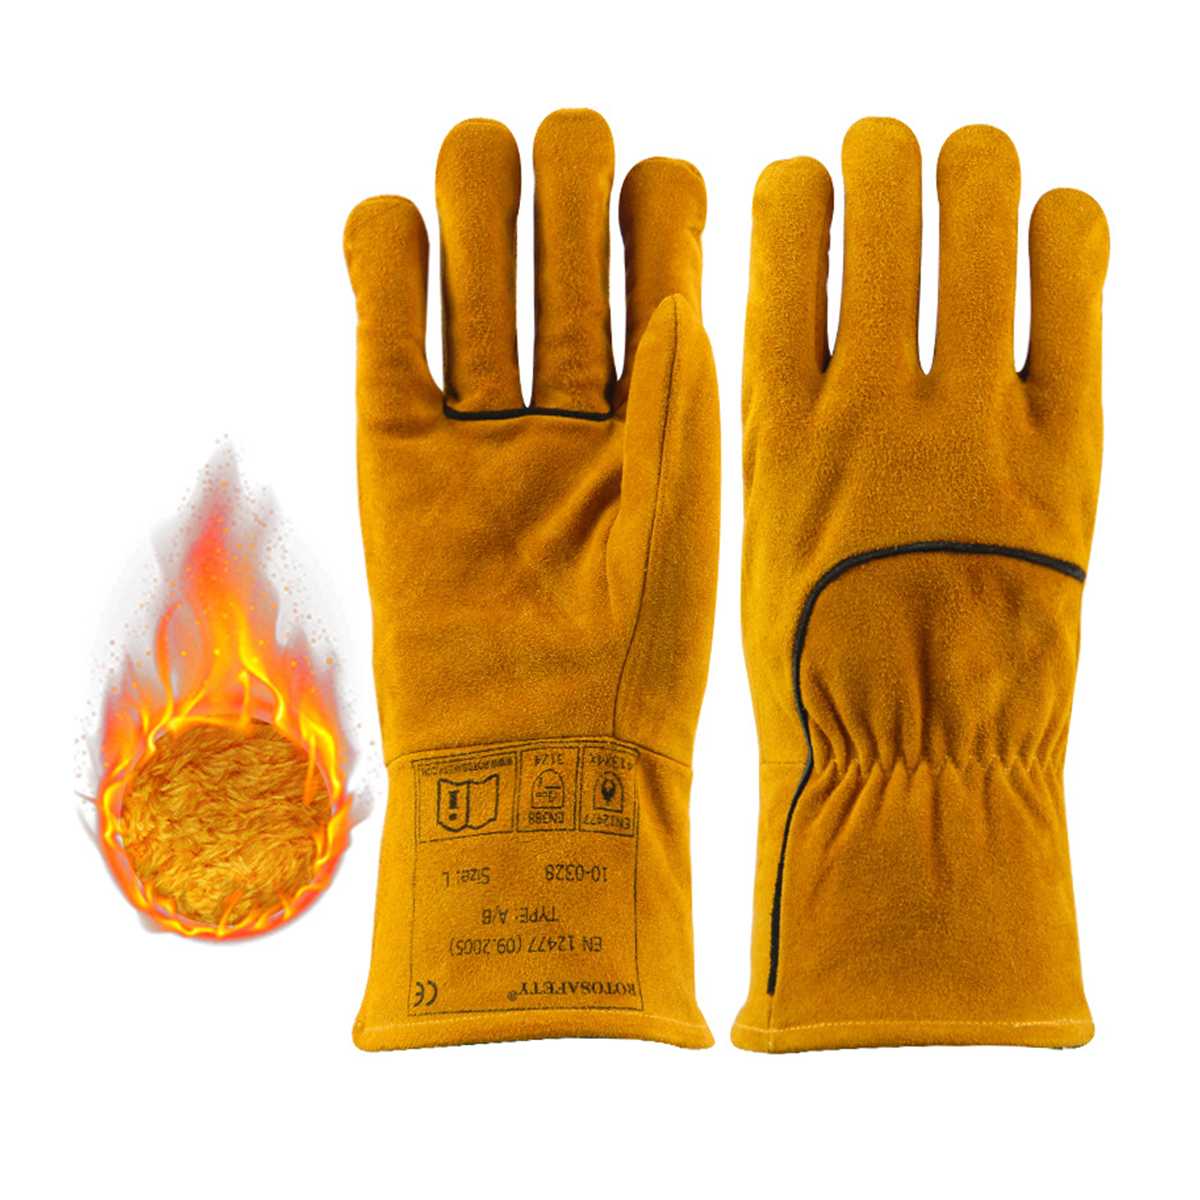 Welding Gloves Leather Forge Heat Resistant Vuam Hnab looj tes rau Mig, Tig Welder, BBQ, Rauv